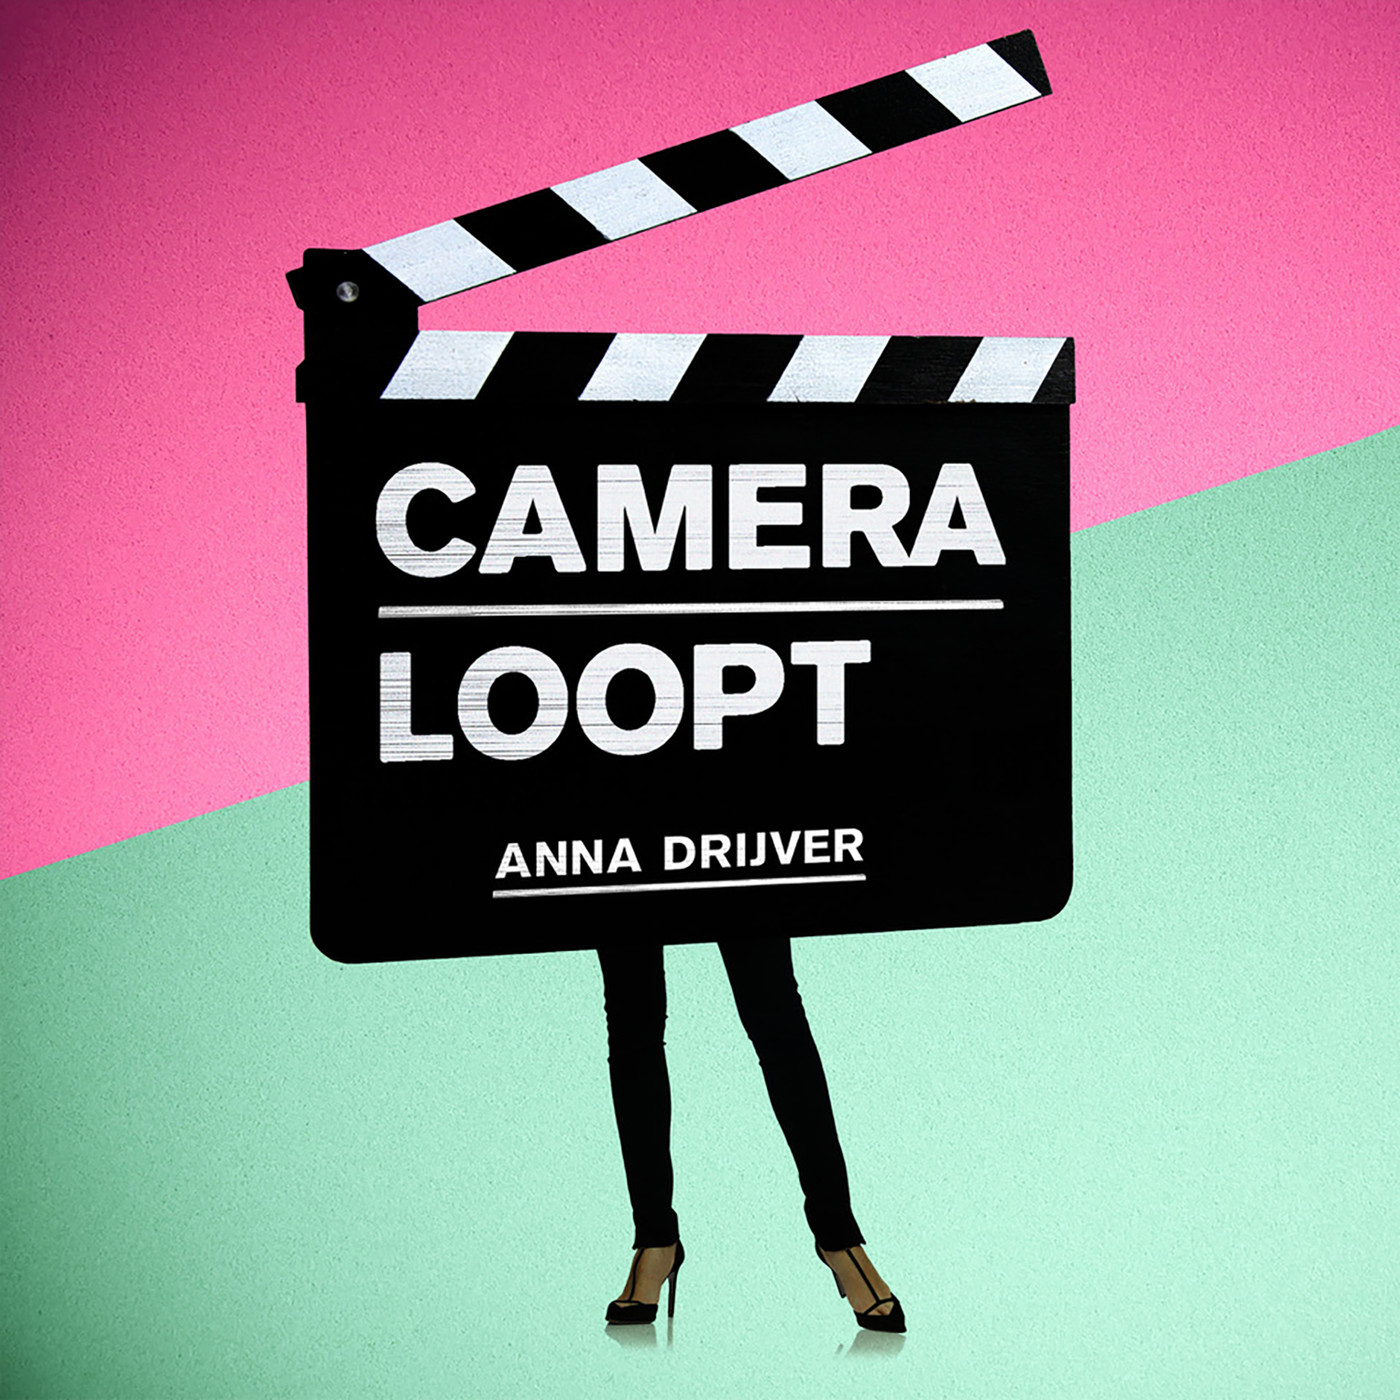 Camera Loopt logo